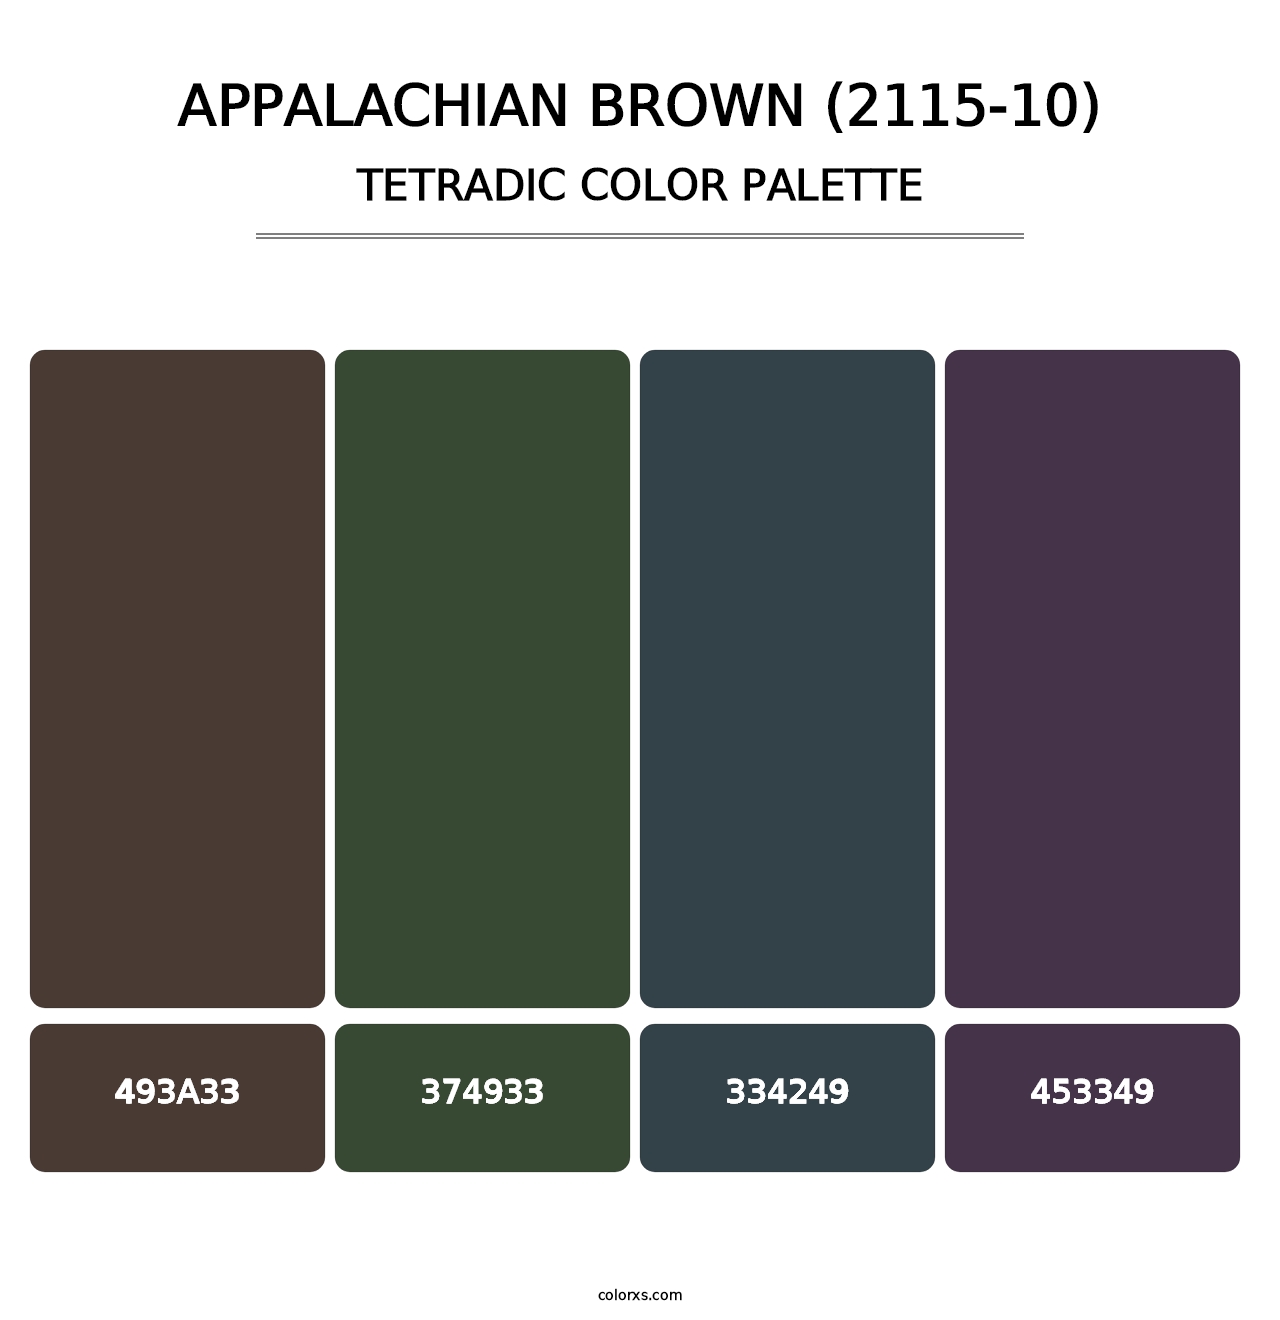 Appalachian Brown (2115-10) - Tetradic Color Palette